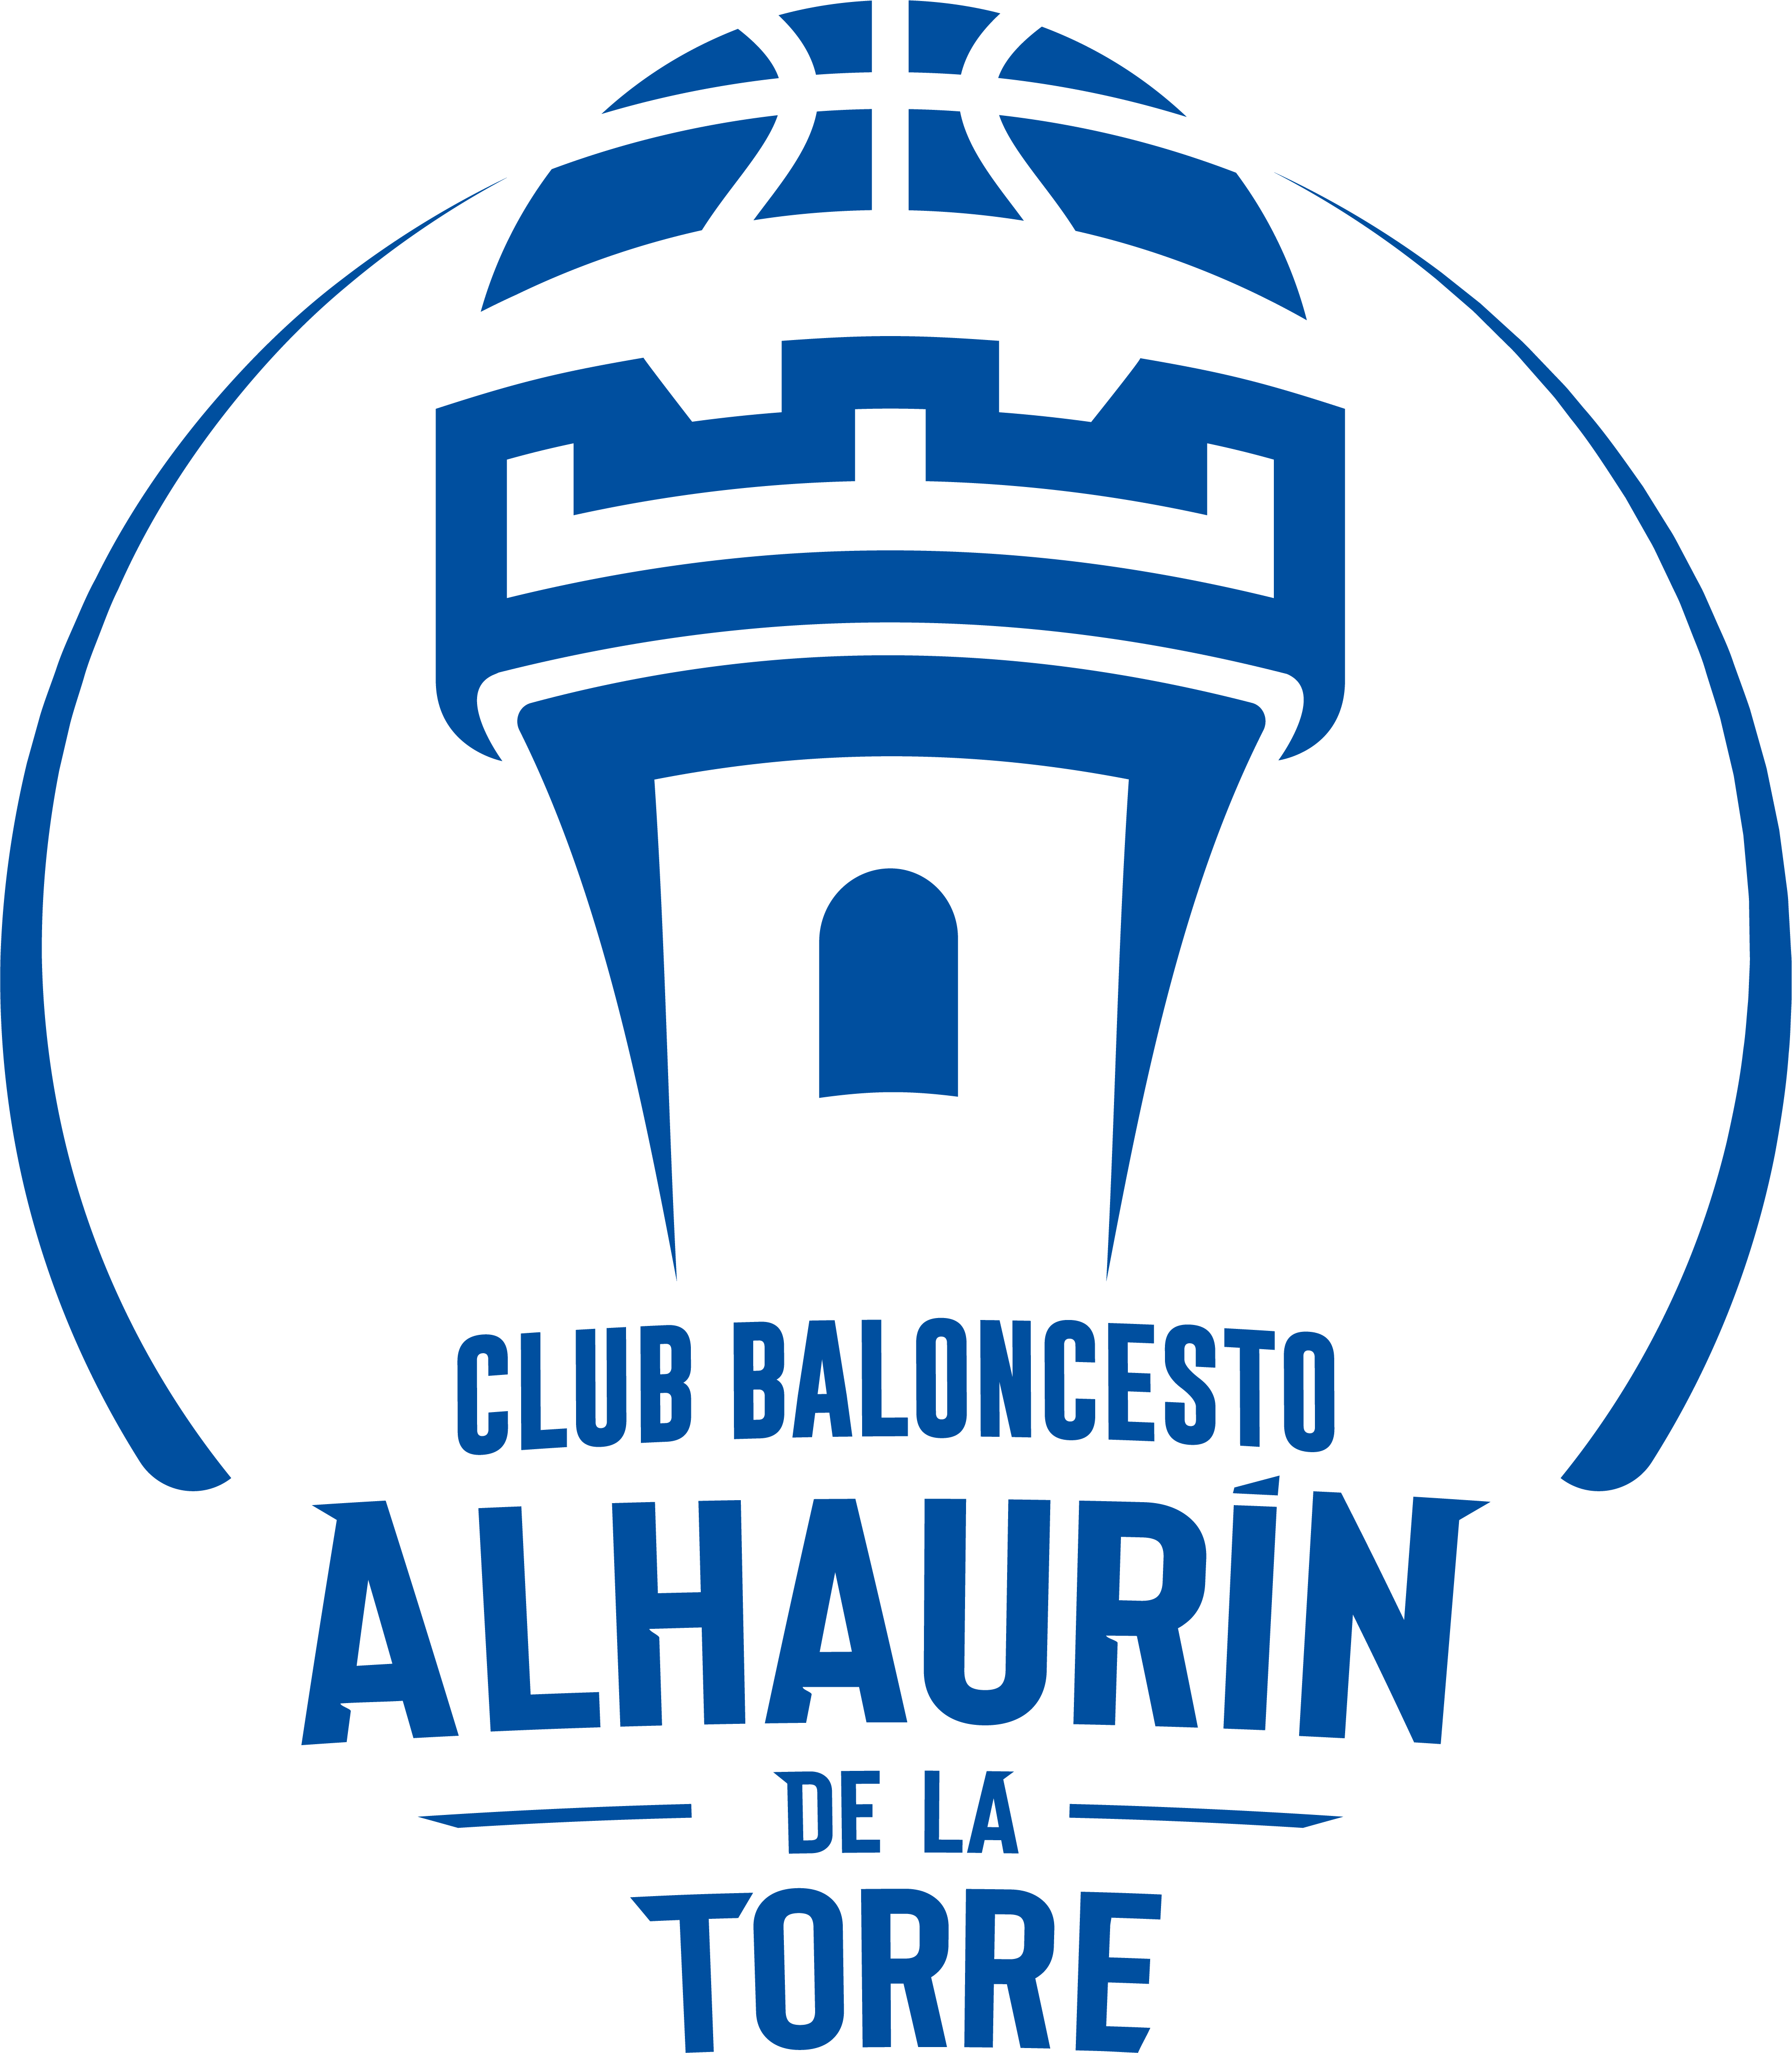 Club Baloncesto Alhaurin de la Torre